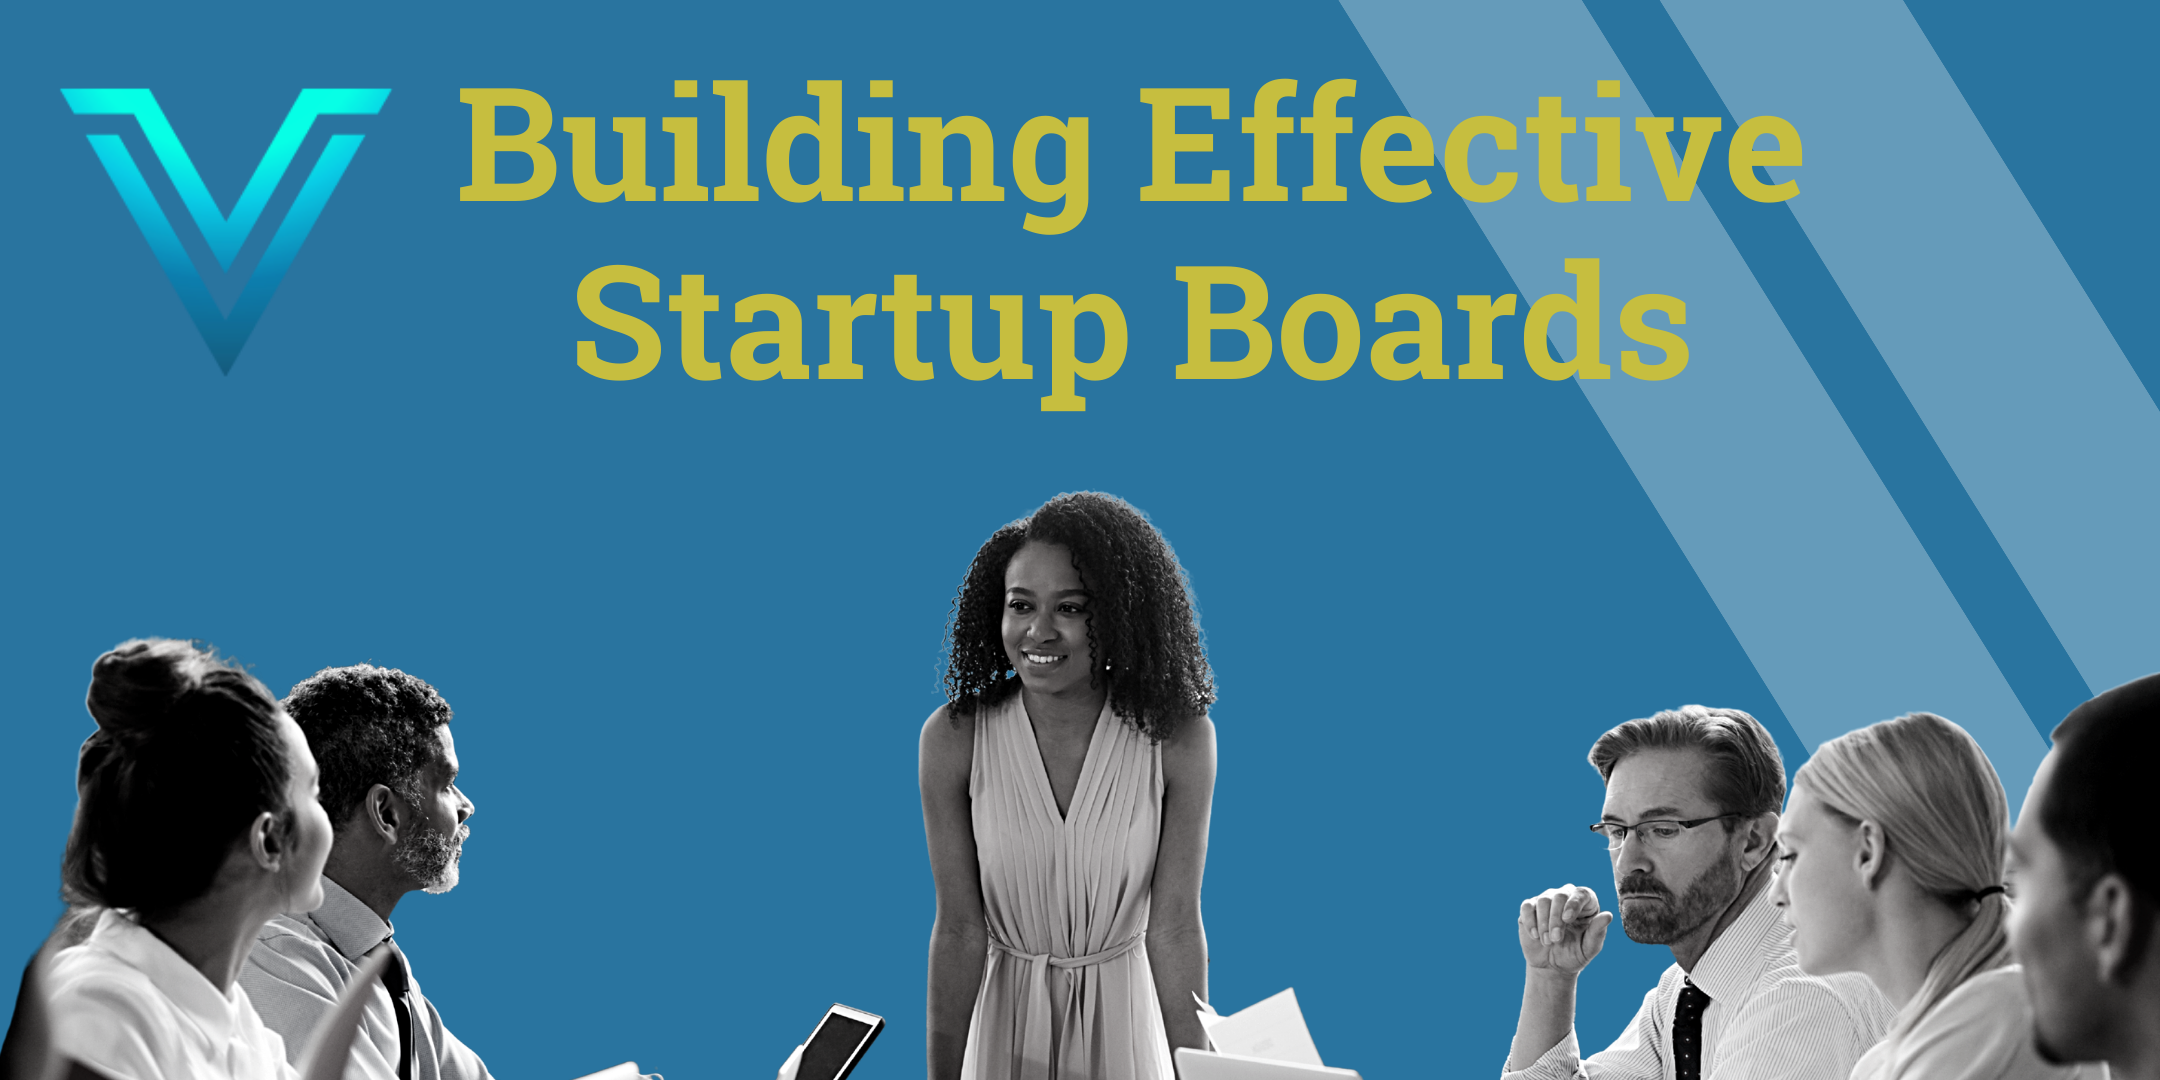 Building Effective Startup Boards